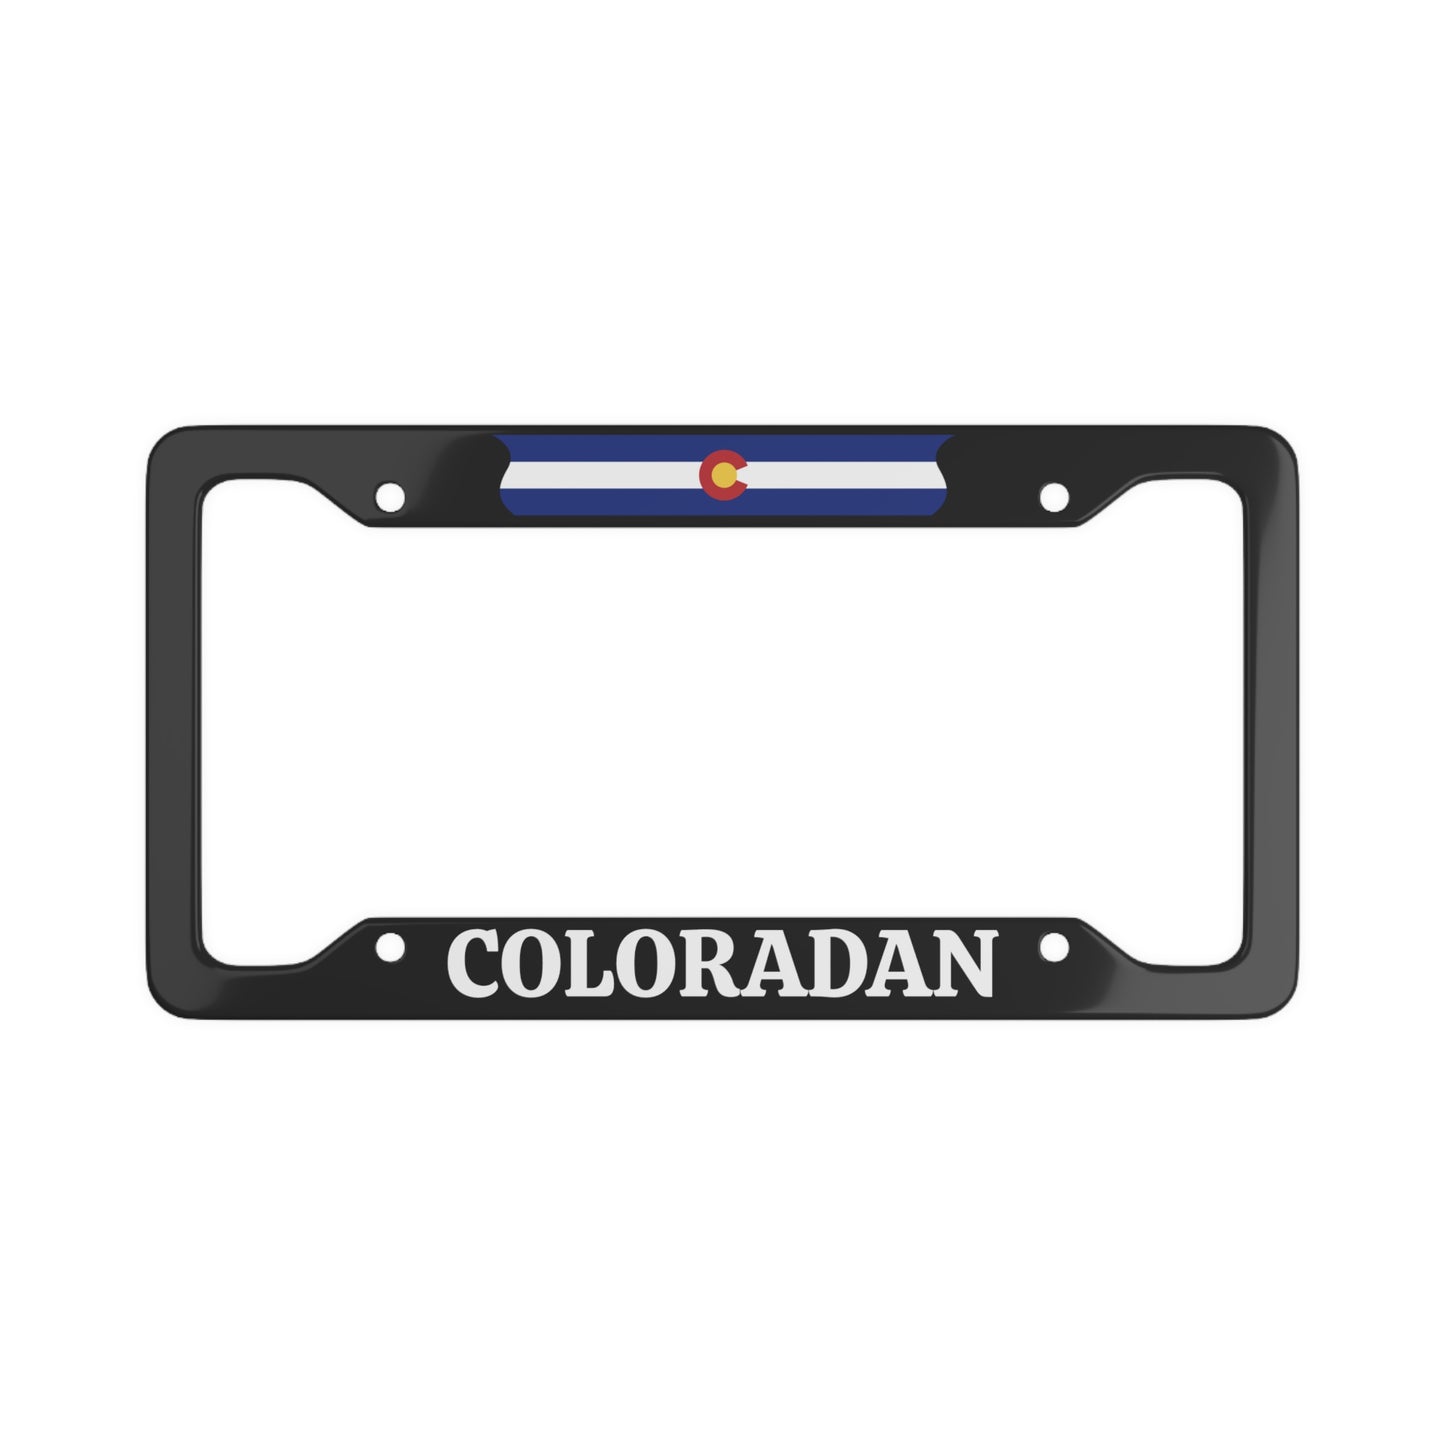 Coloradan, Colorado State, USA License Plate Frame